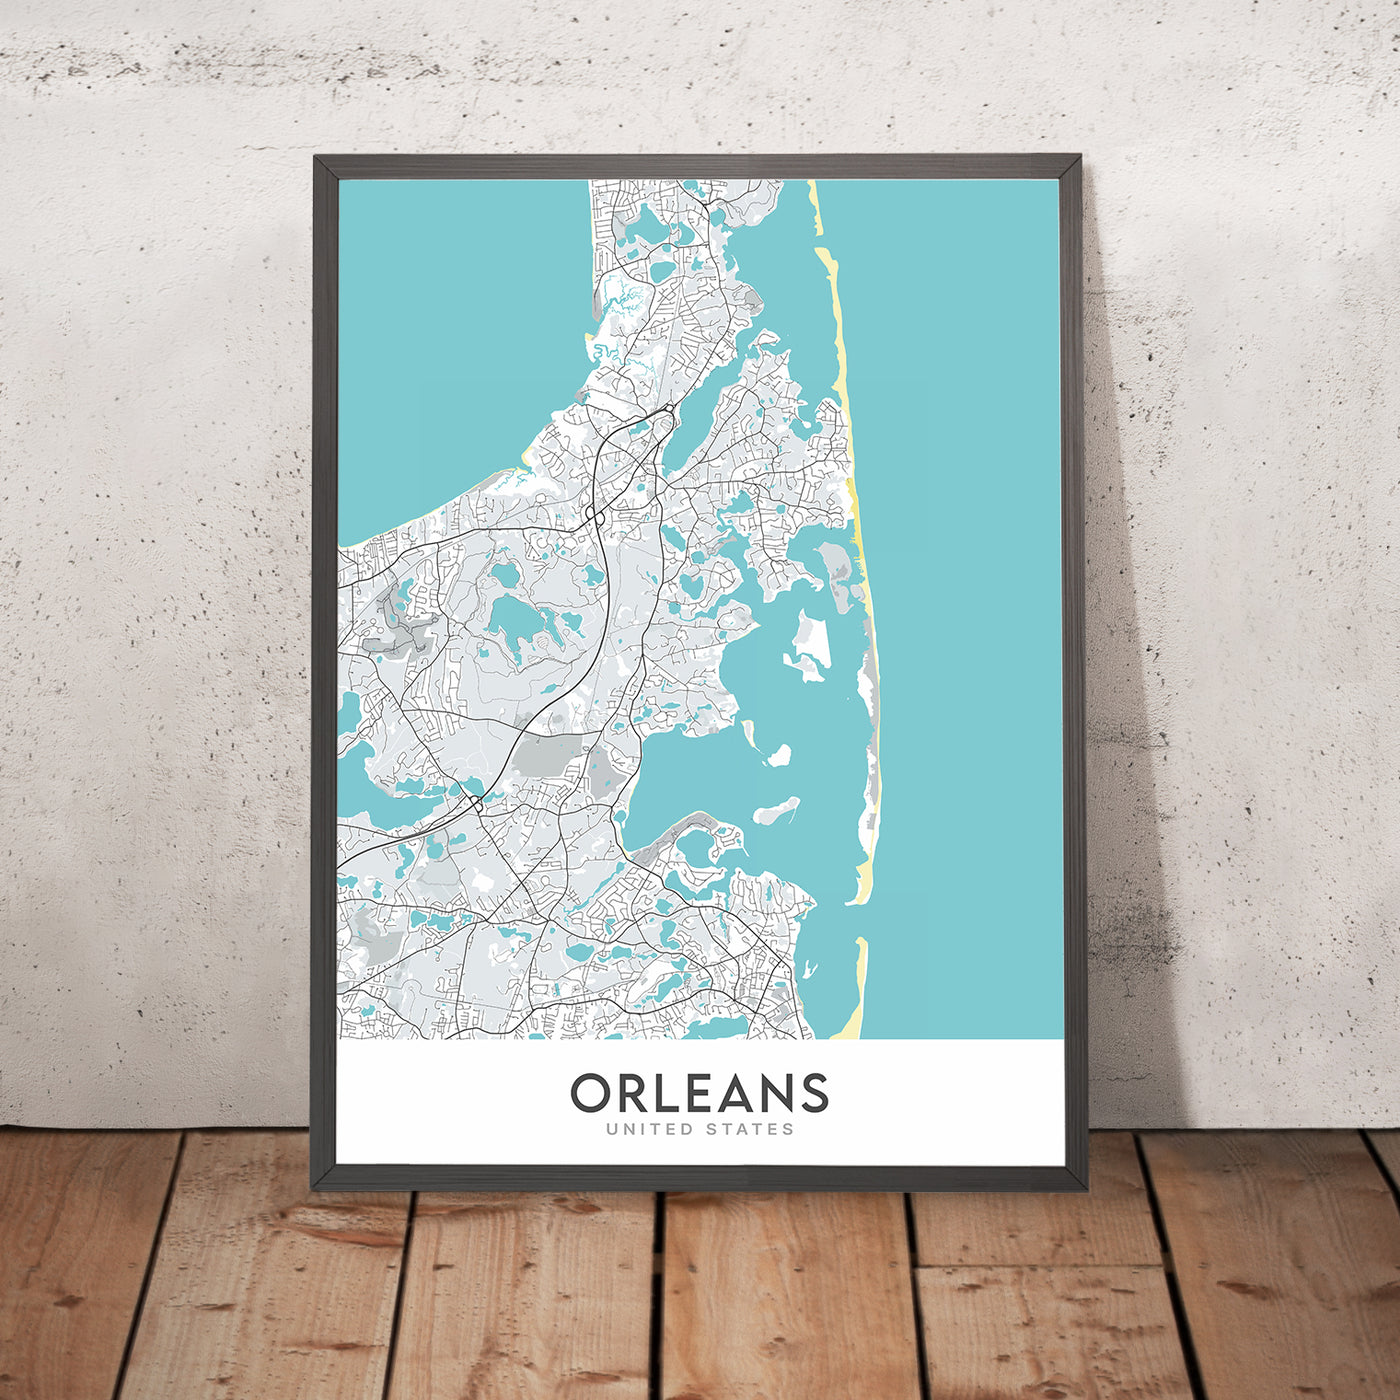 Plan de la ville moderne d'Orléans, MA : Nauset Beach, Skaket Beach, Rock Harbor, Pleasant Bay, Cape Cod National Seashore